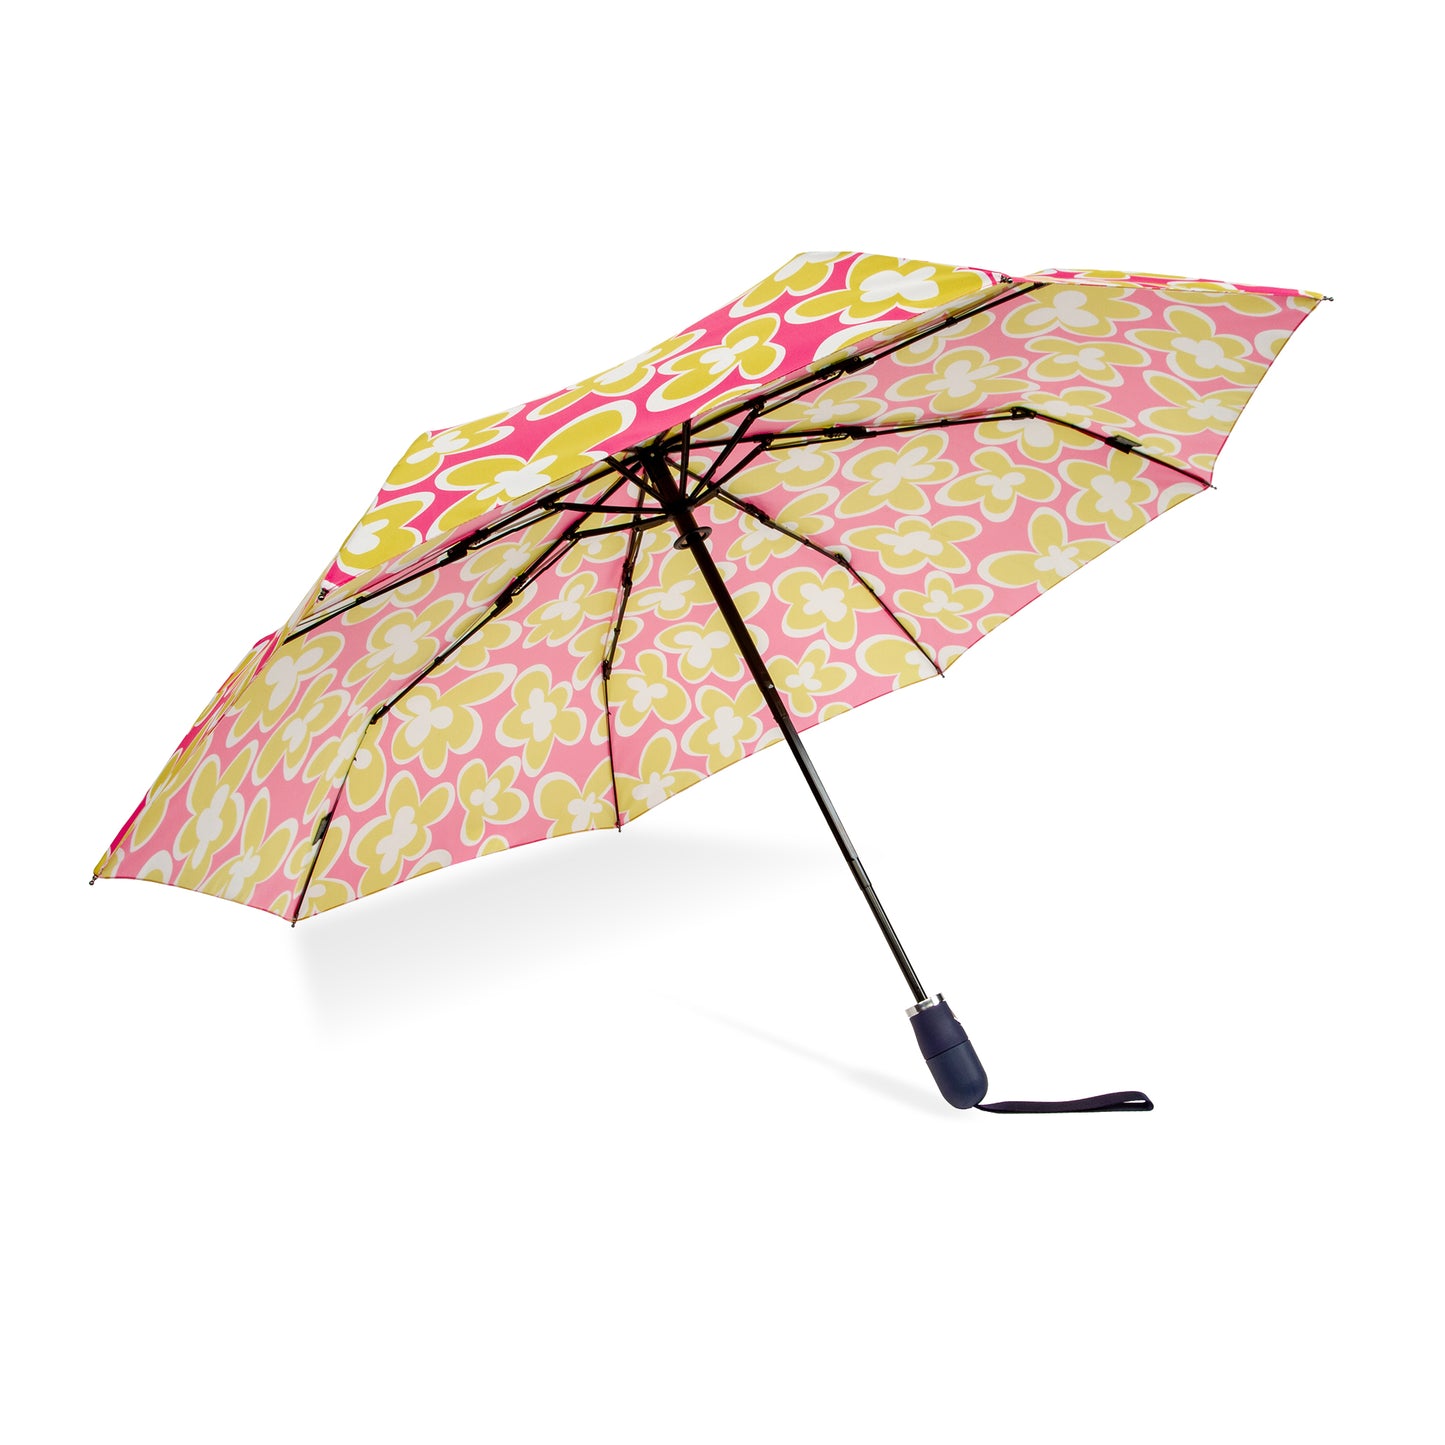 TRINA TURK x SHED RAIN Palm Bay Floral Compact Umbrella